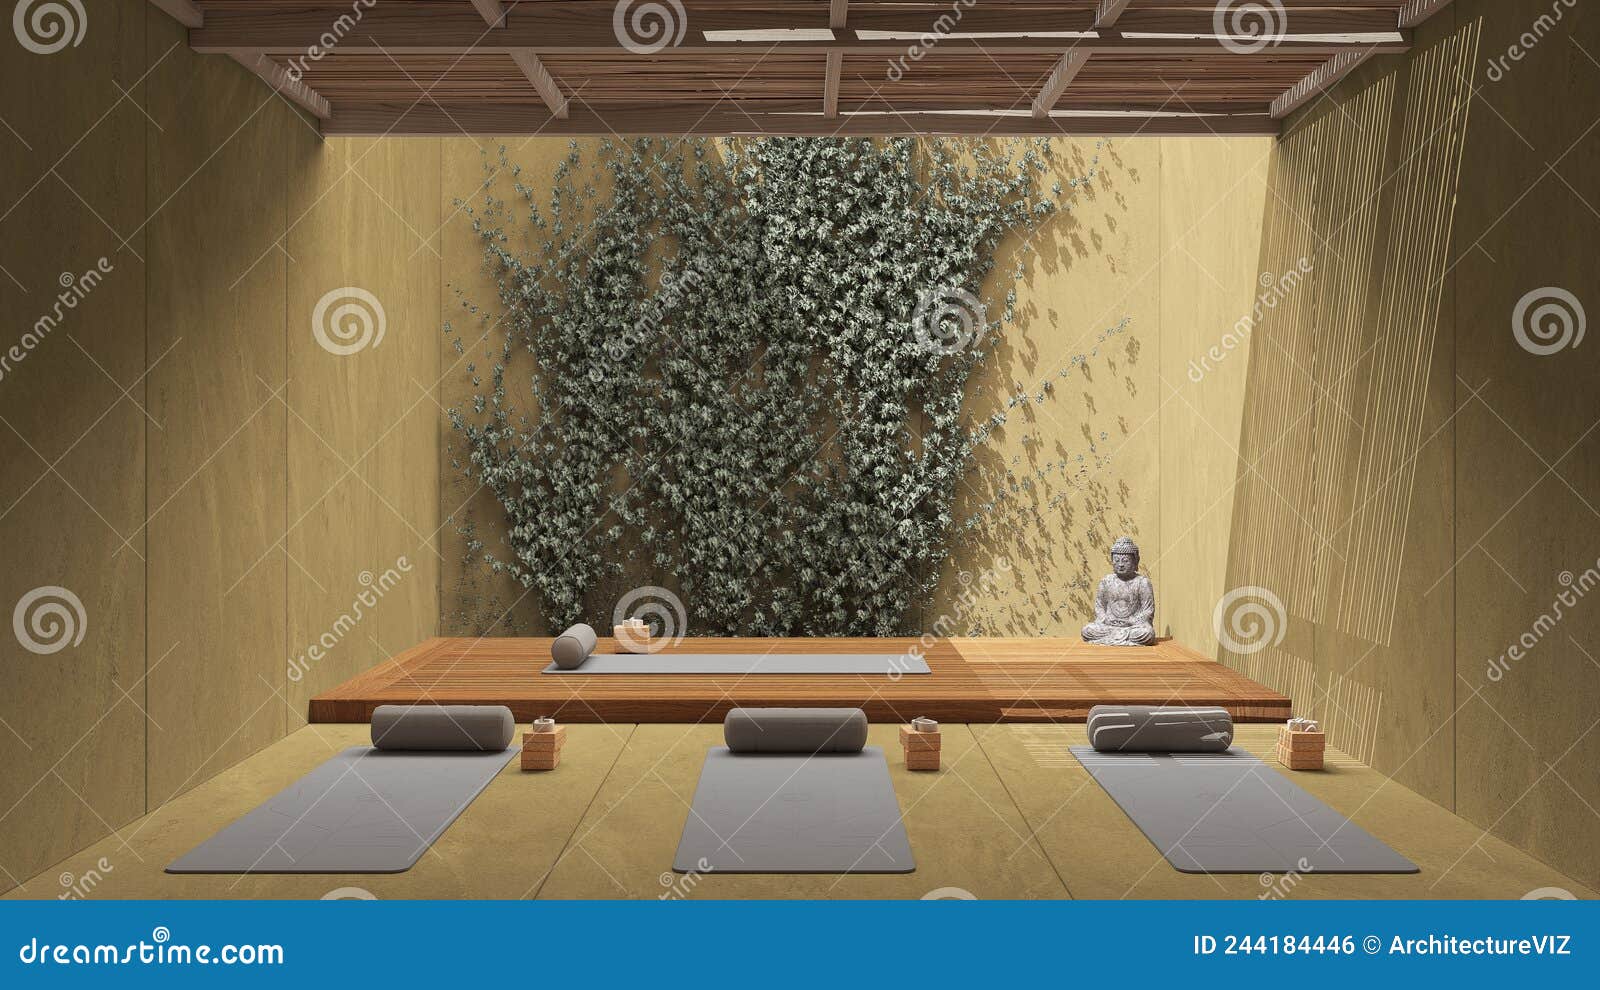 Yoga Studio Interior Design in Yellow Tones, Japanese Zen Style